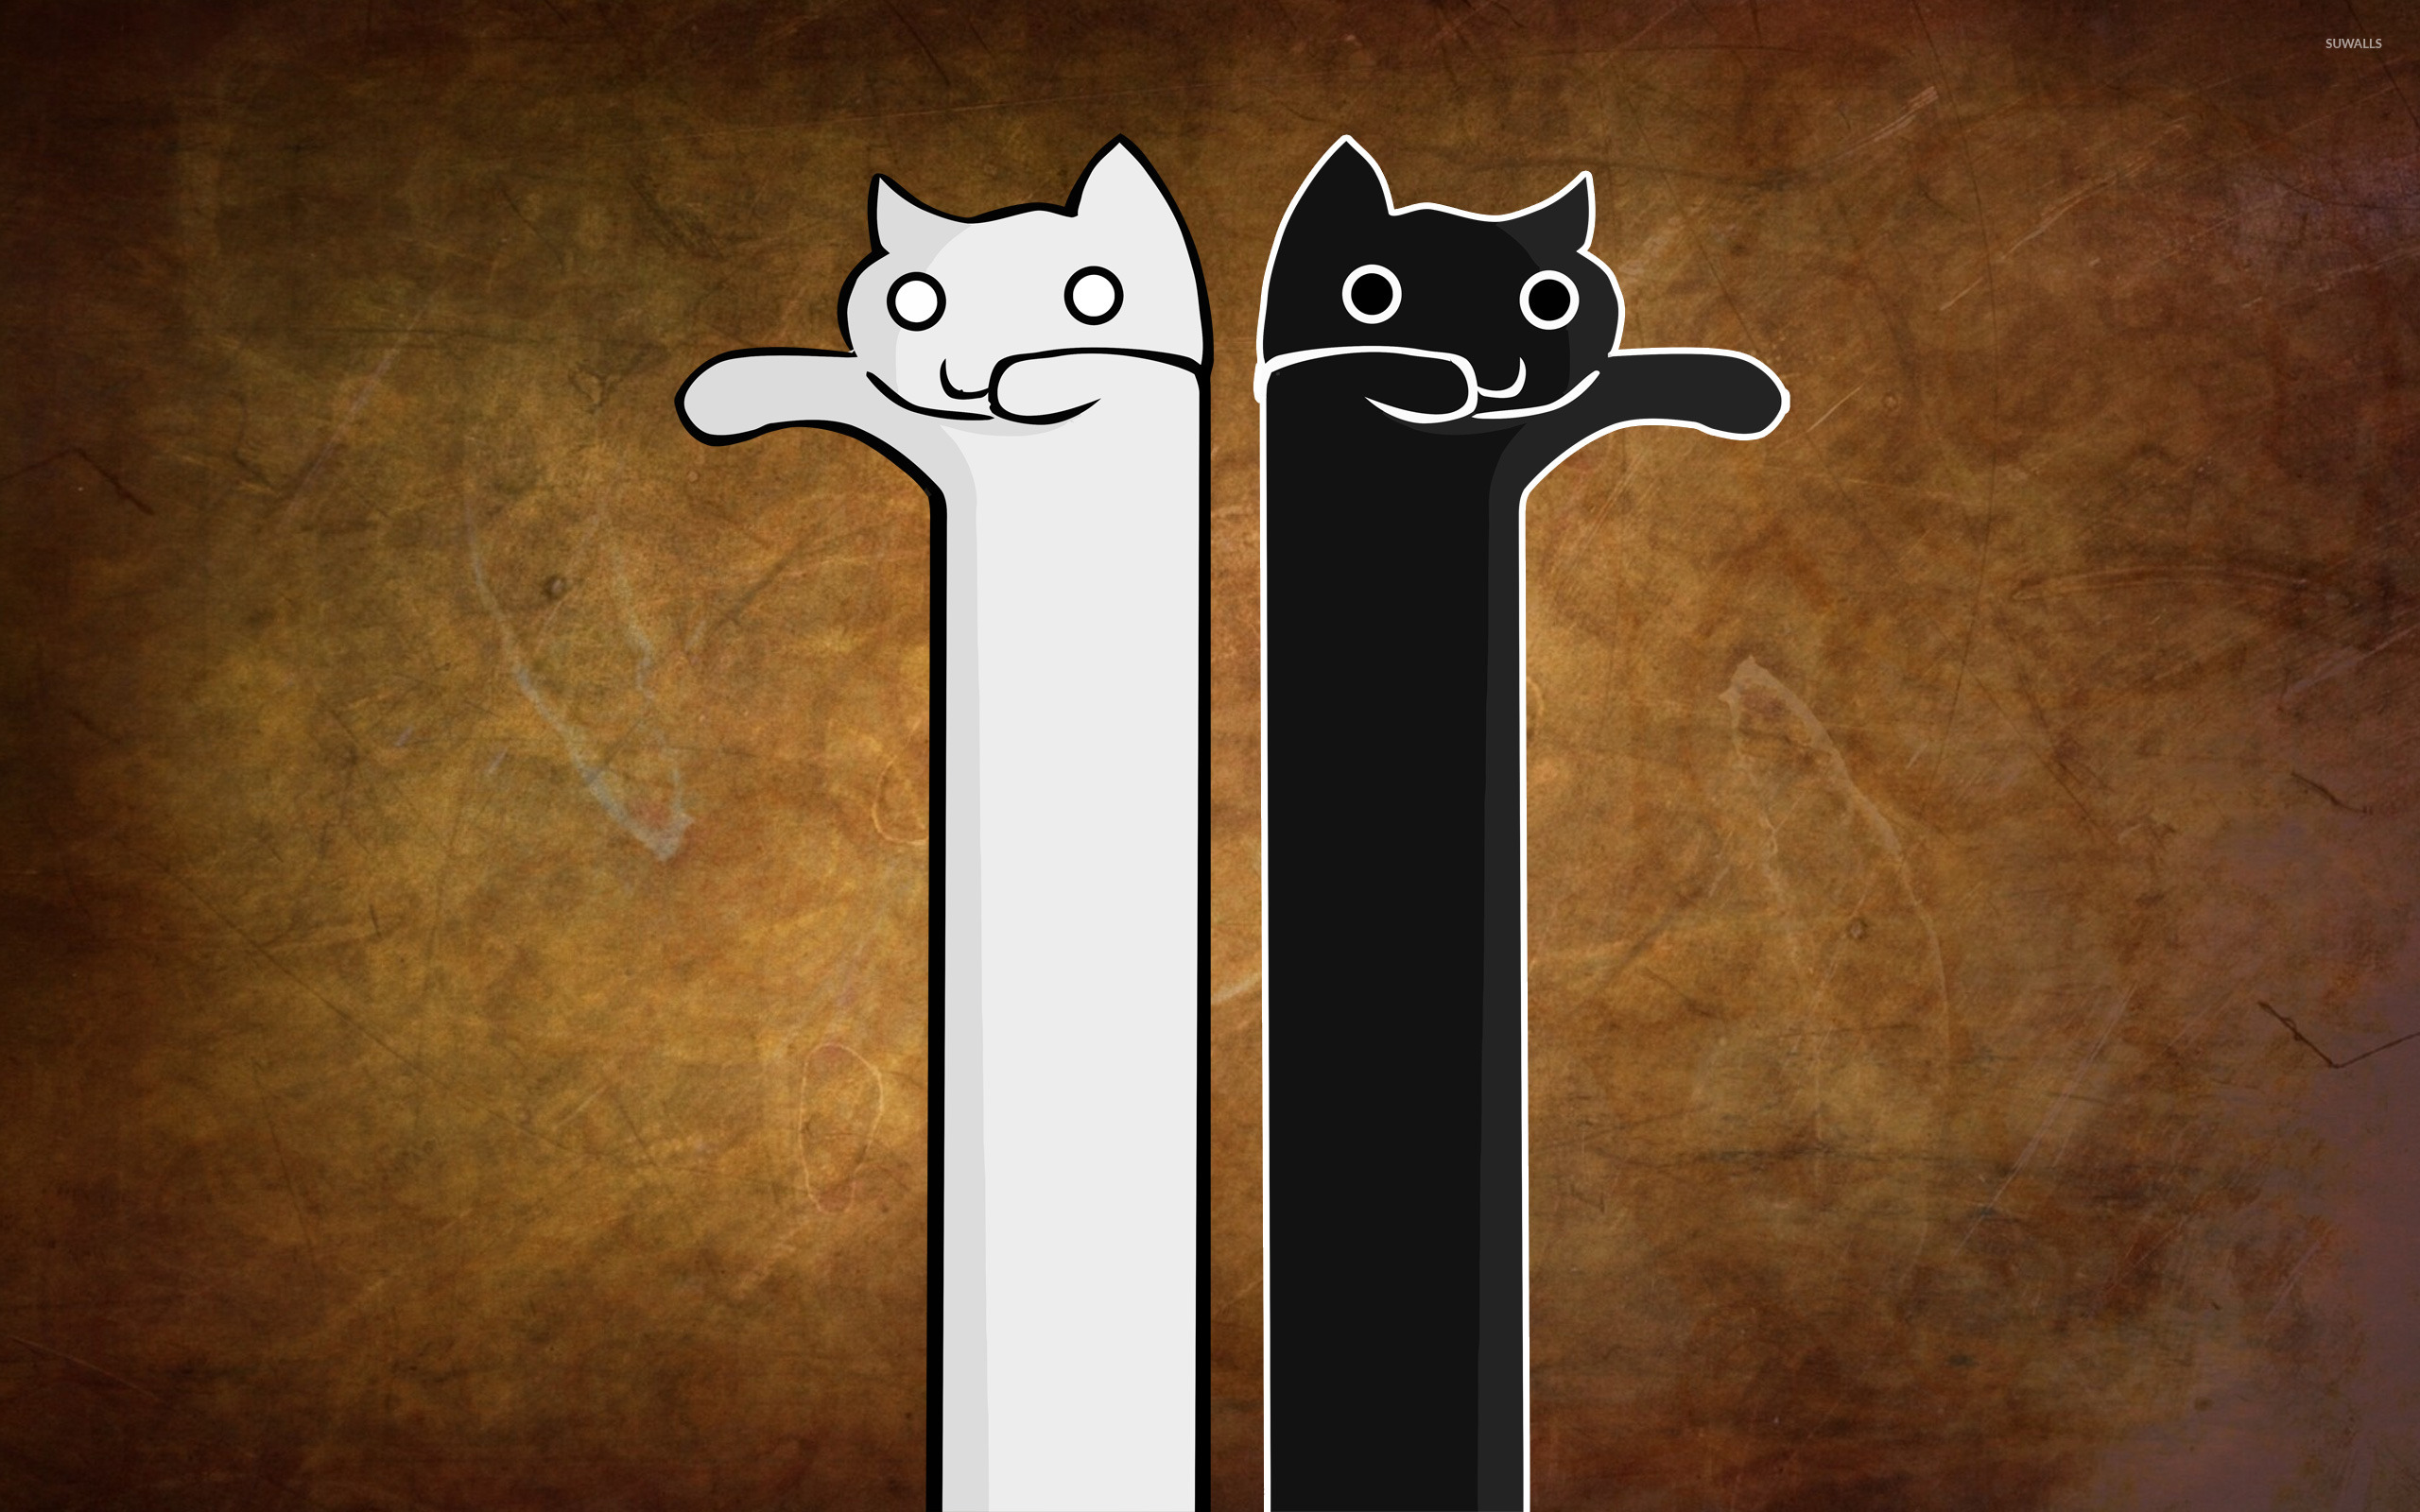 White and black longcats wallpaper Meme wallpapers 9571 2560x1600. 